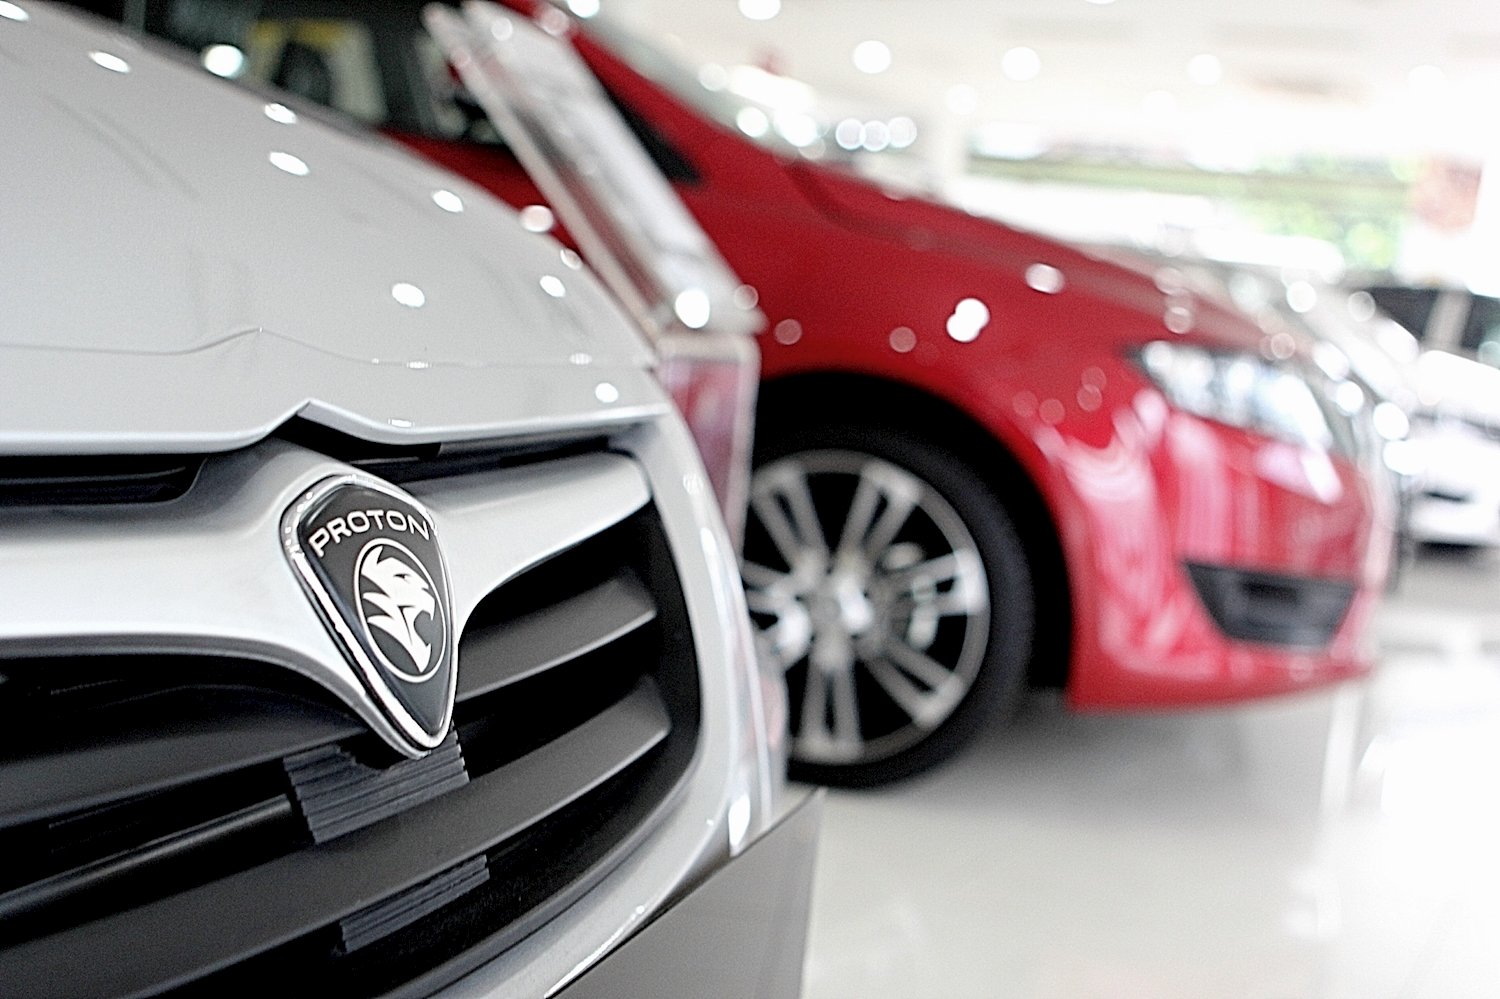 proton - Mobil Malaysia, Produk Lokal Yang Jadi Pimadona Bangsanya